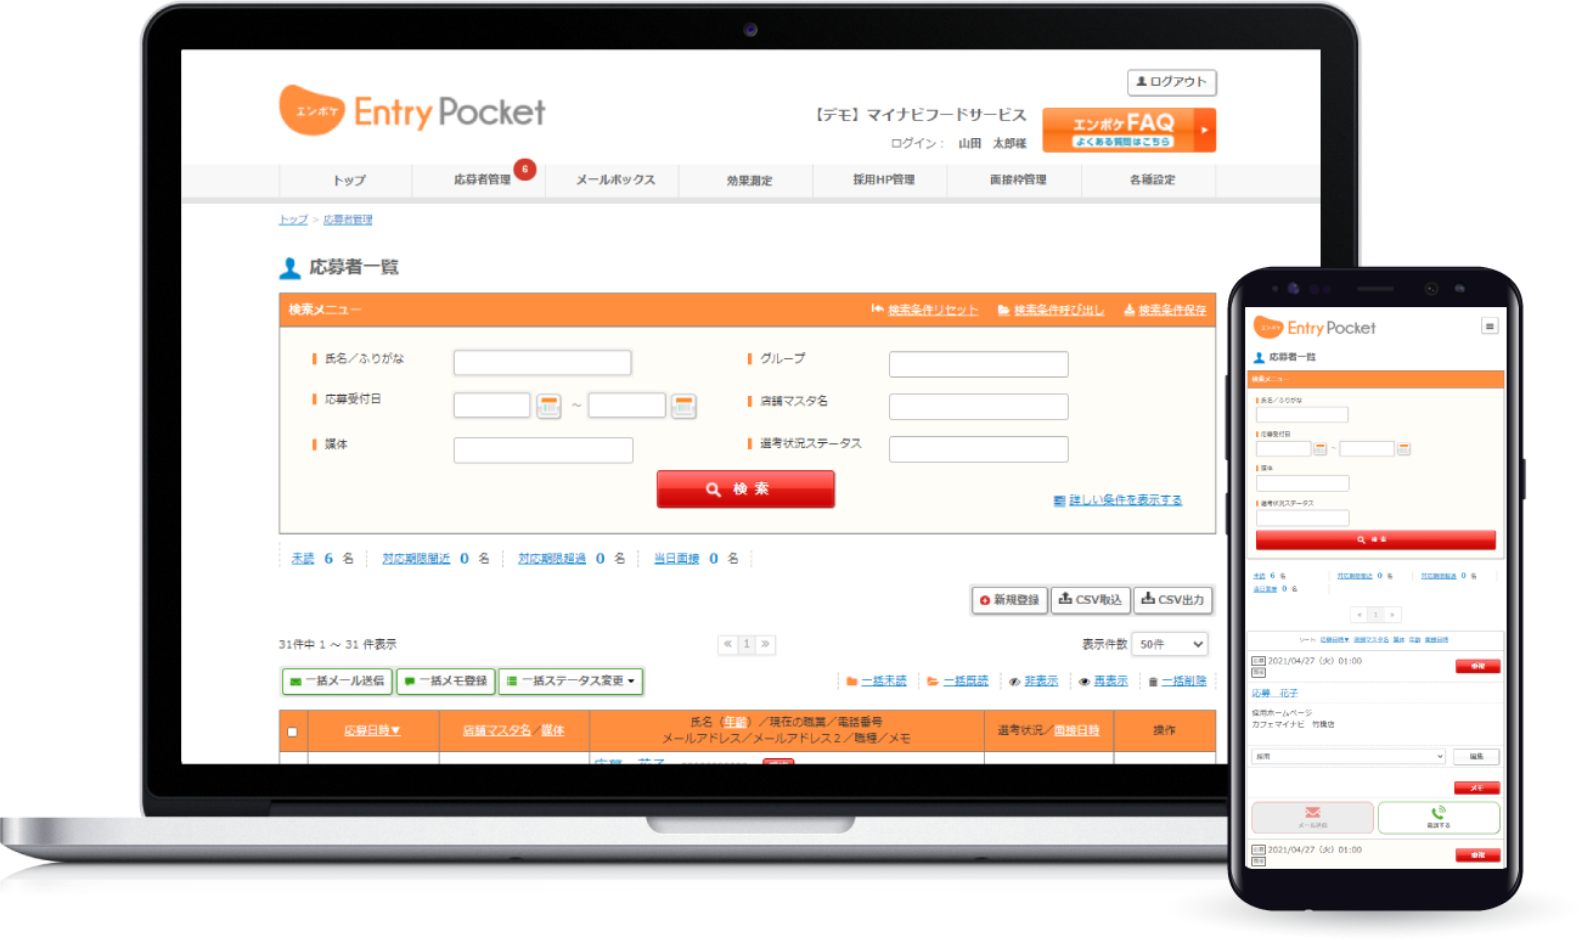 Entry Pocket エントリーポケット アルバイト パートの採用管理 応募者管理システム